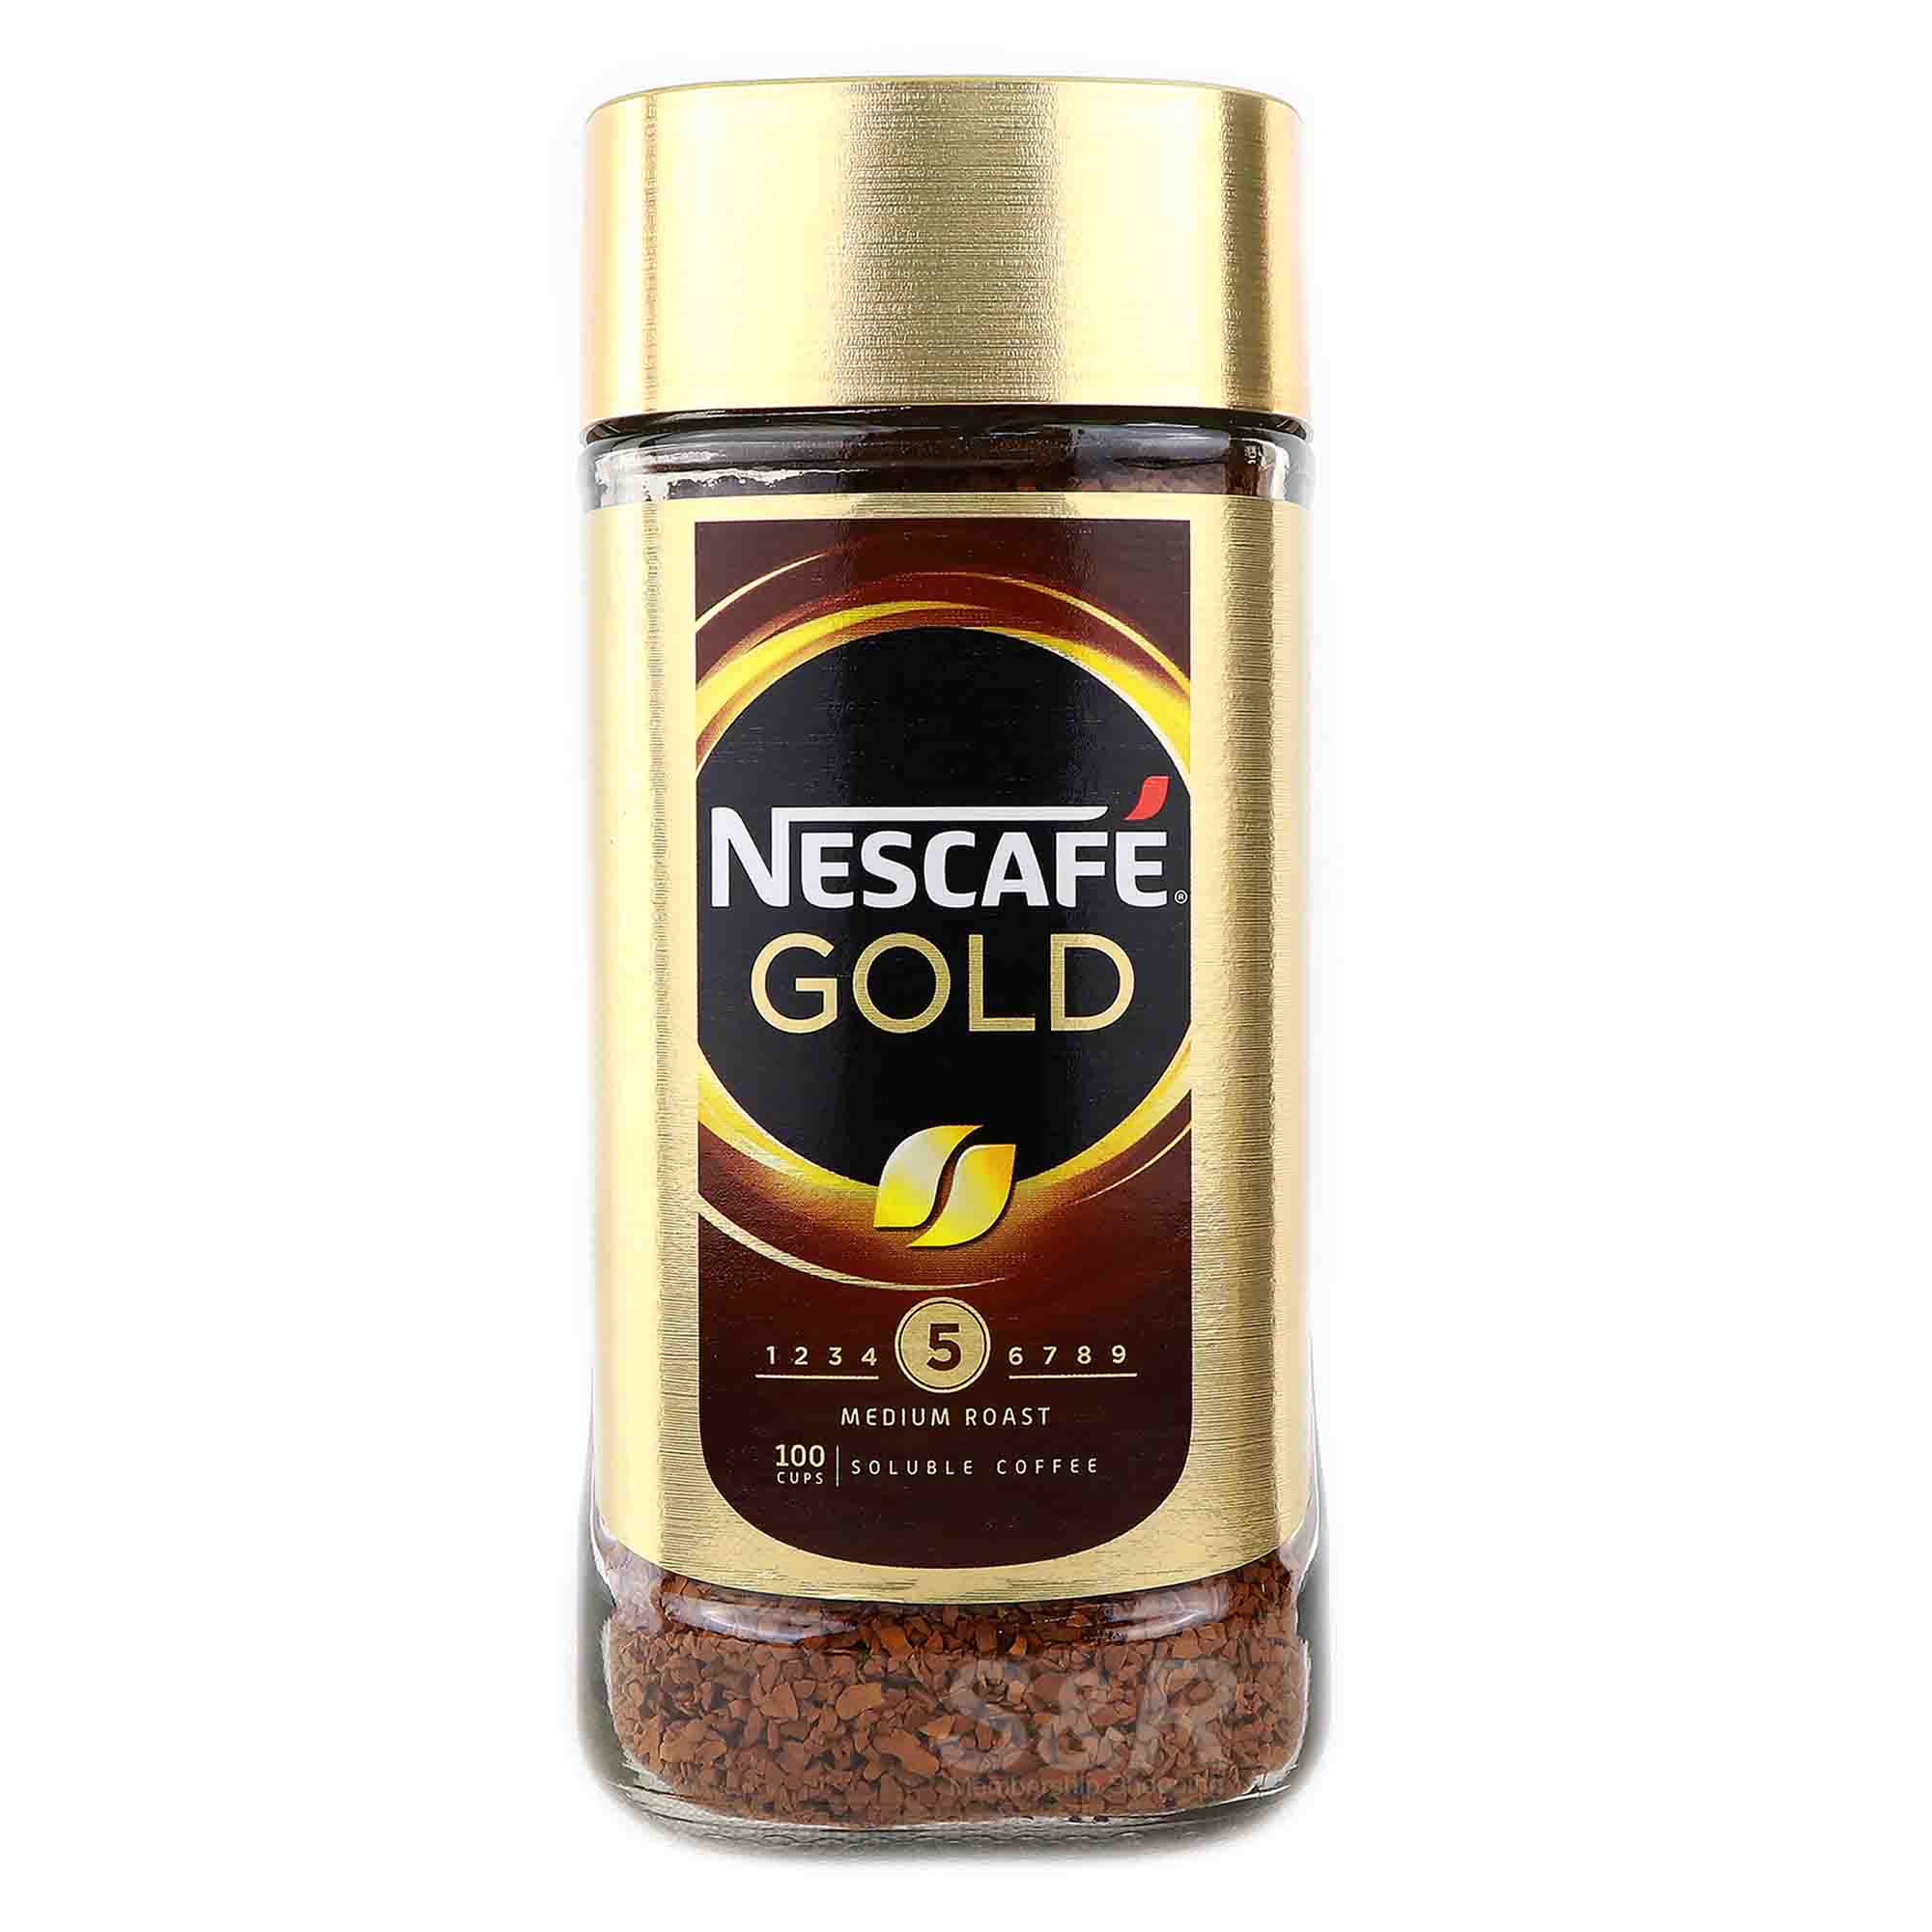 Nescafe Gold Medium Roast Soluble Coffee 200g